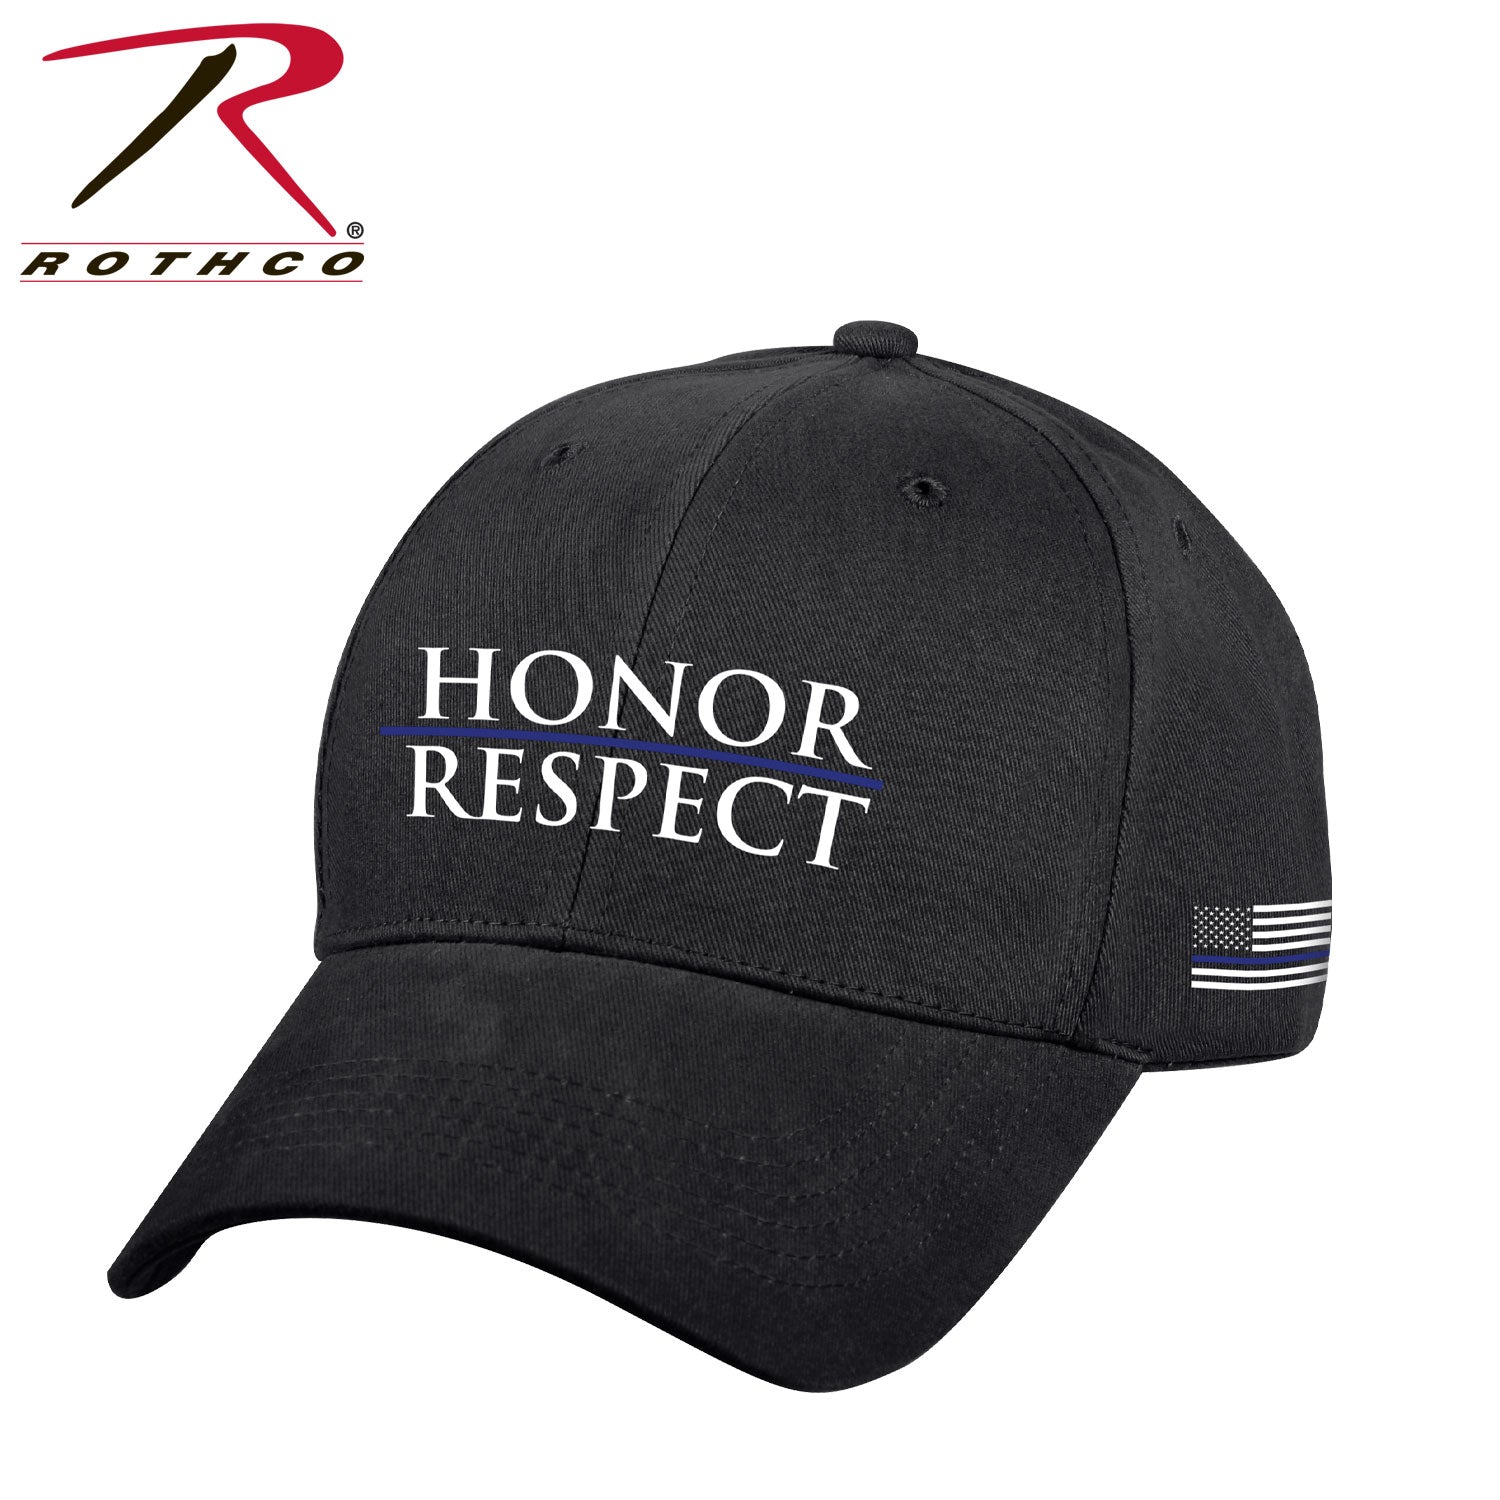 Honor & Respect Low Profile Cap Black #4463